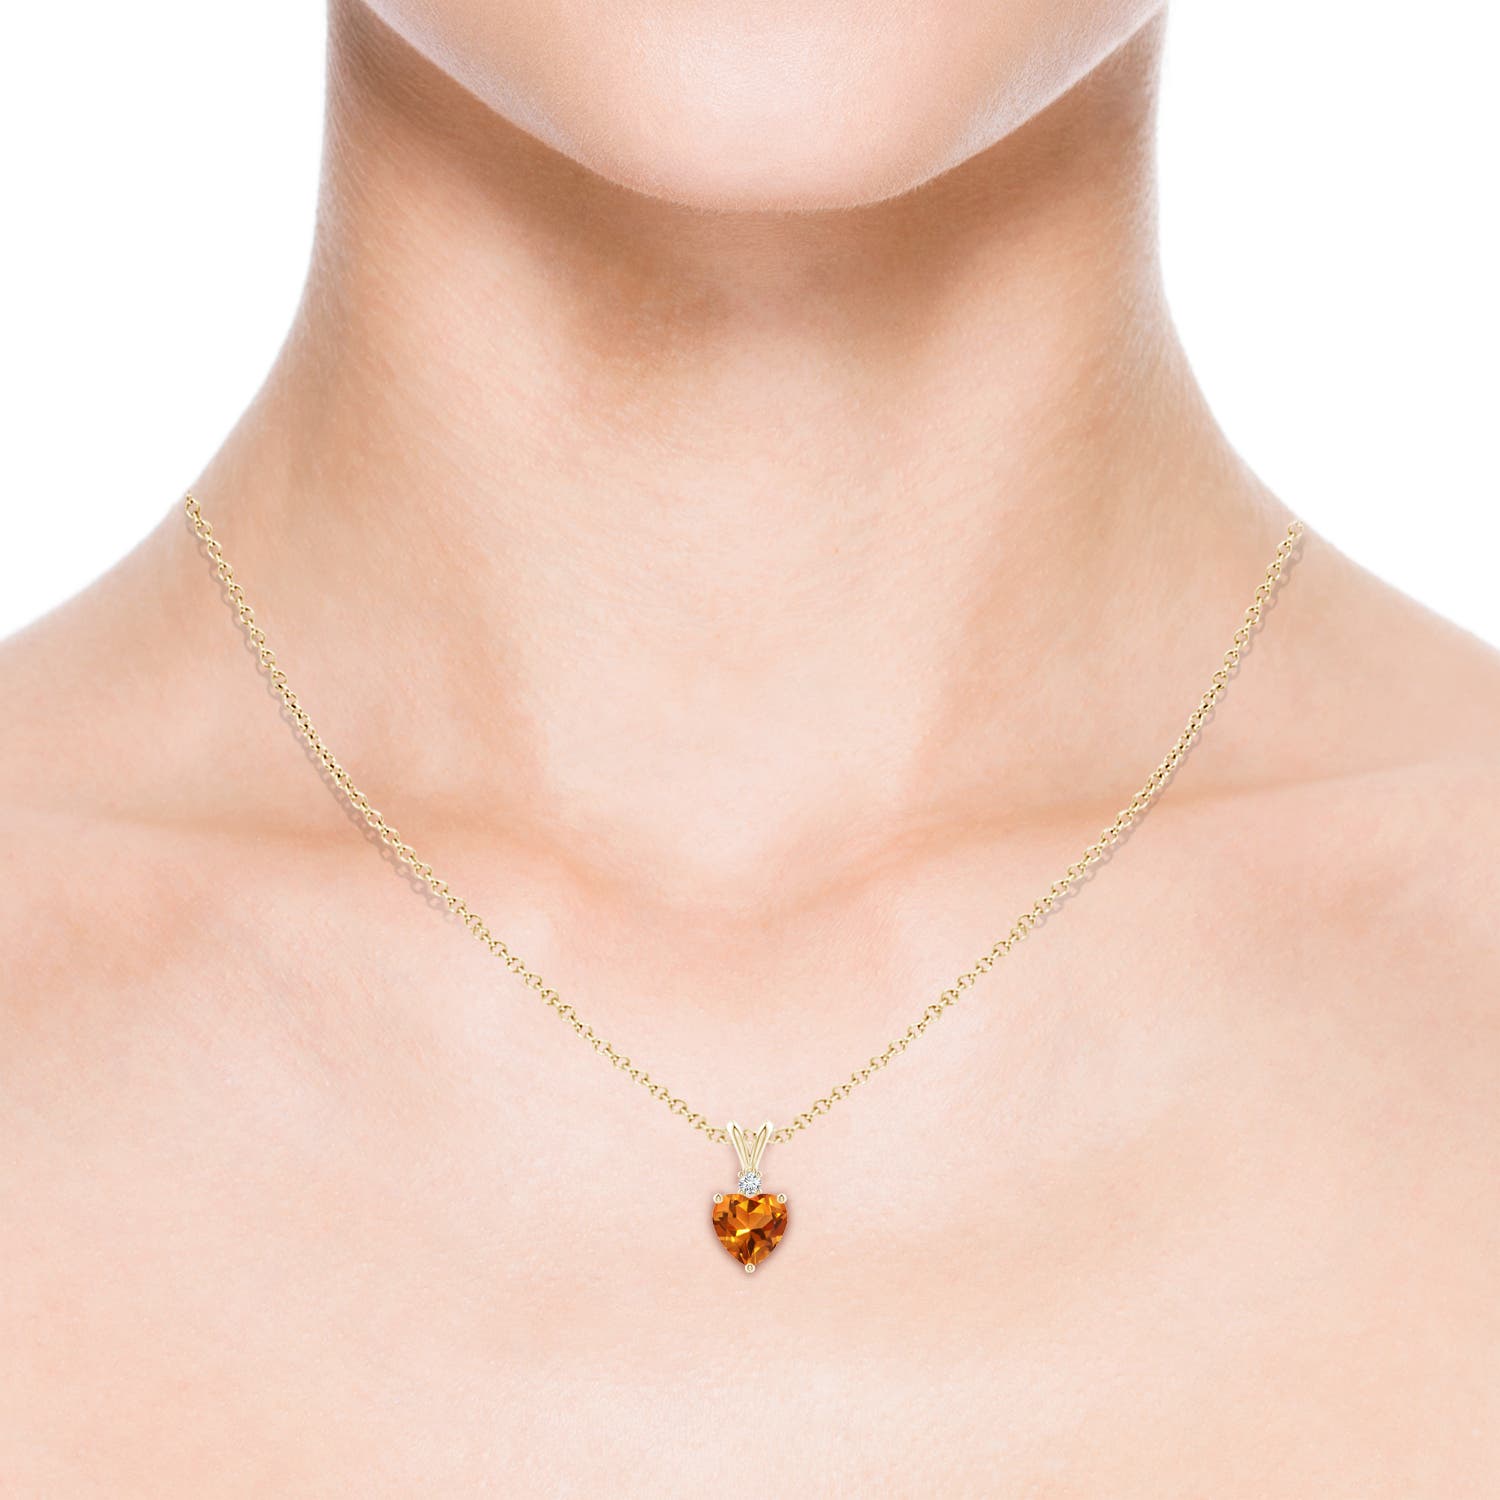 Shop Citrine Pendant Necklaces for Women | Angara